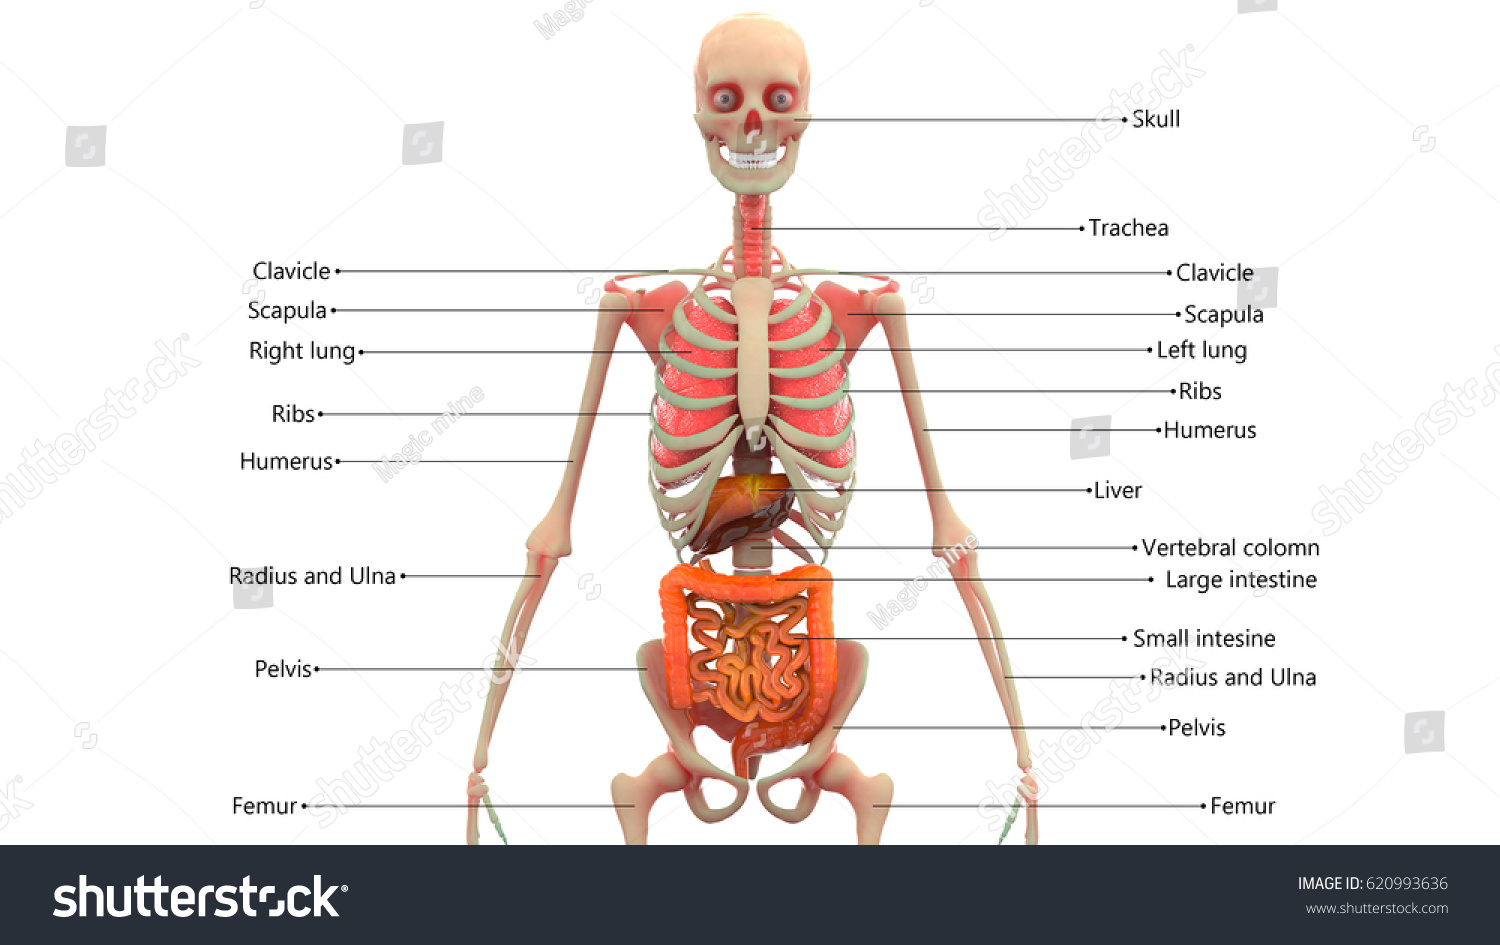 Human Skeleton Organs Anatomy 3 D Stock Illustration 620993636